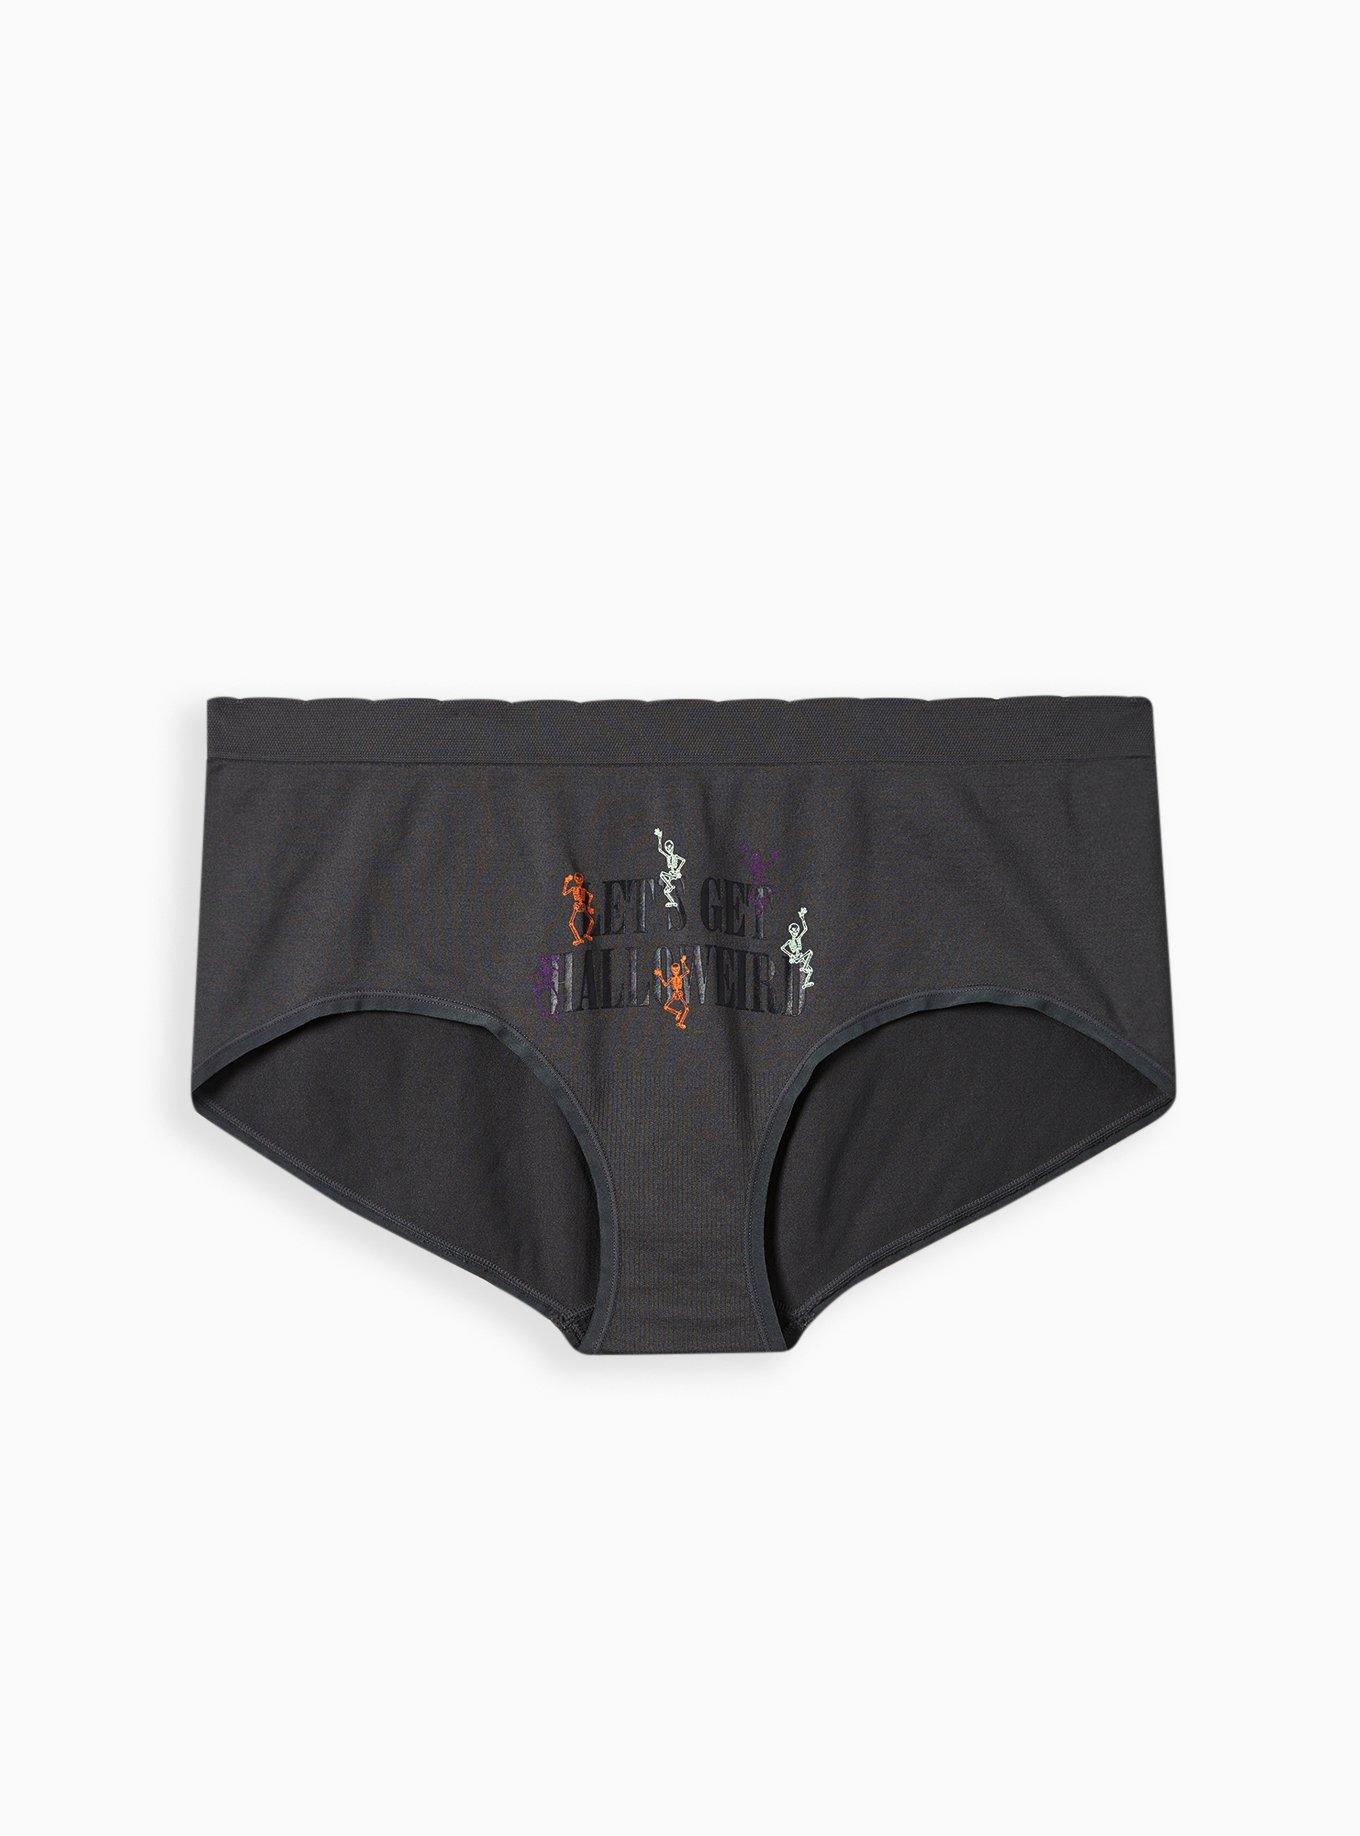 Torrid Cheeky Panties Underwear Curve Striped Pups Dogs Plus Size 3 22 / 24